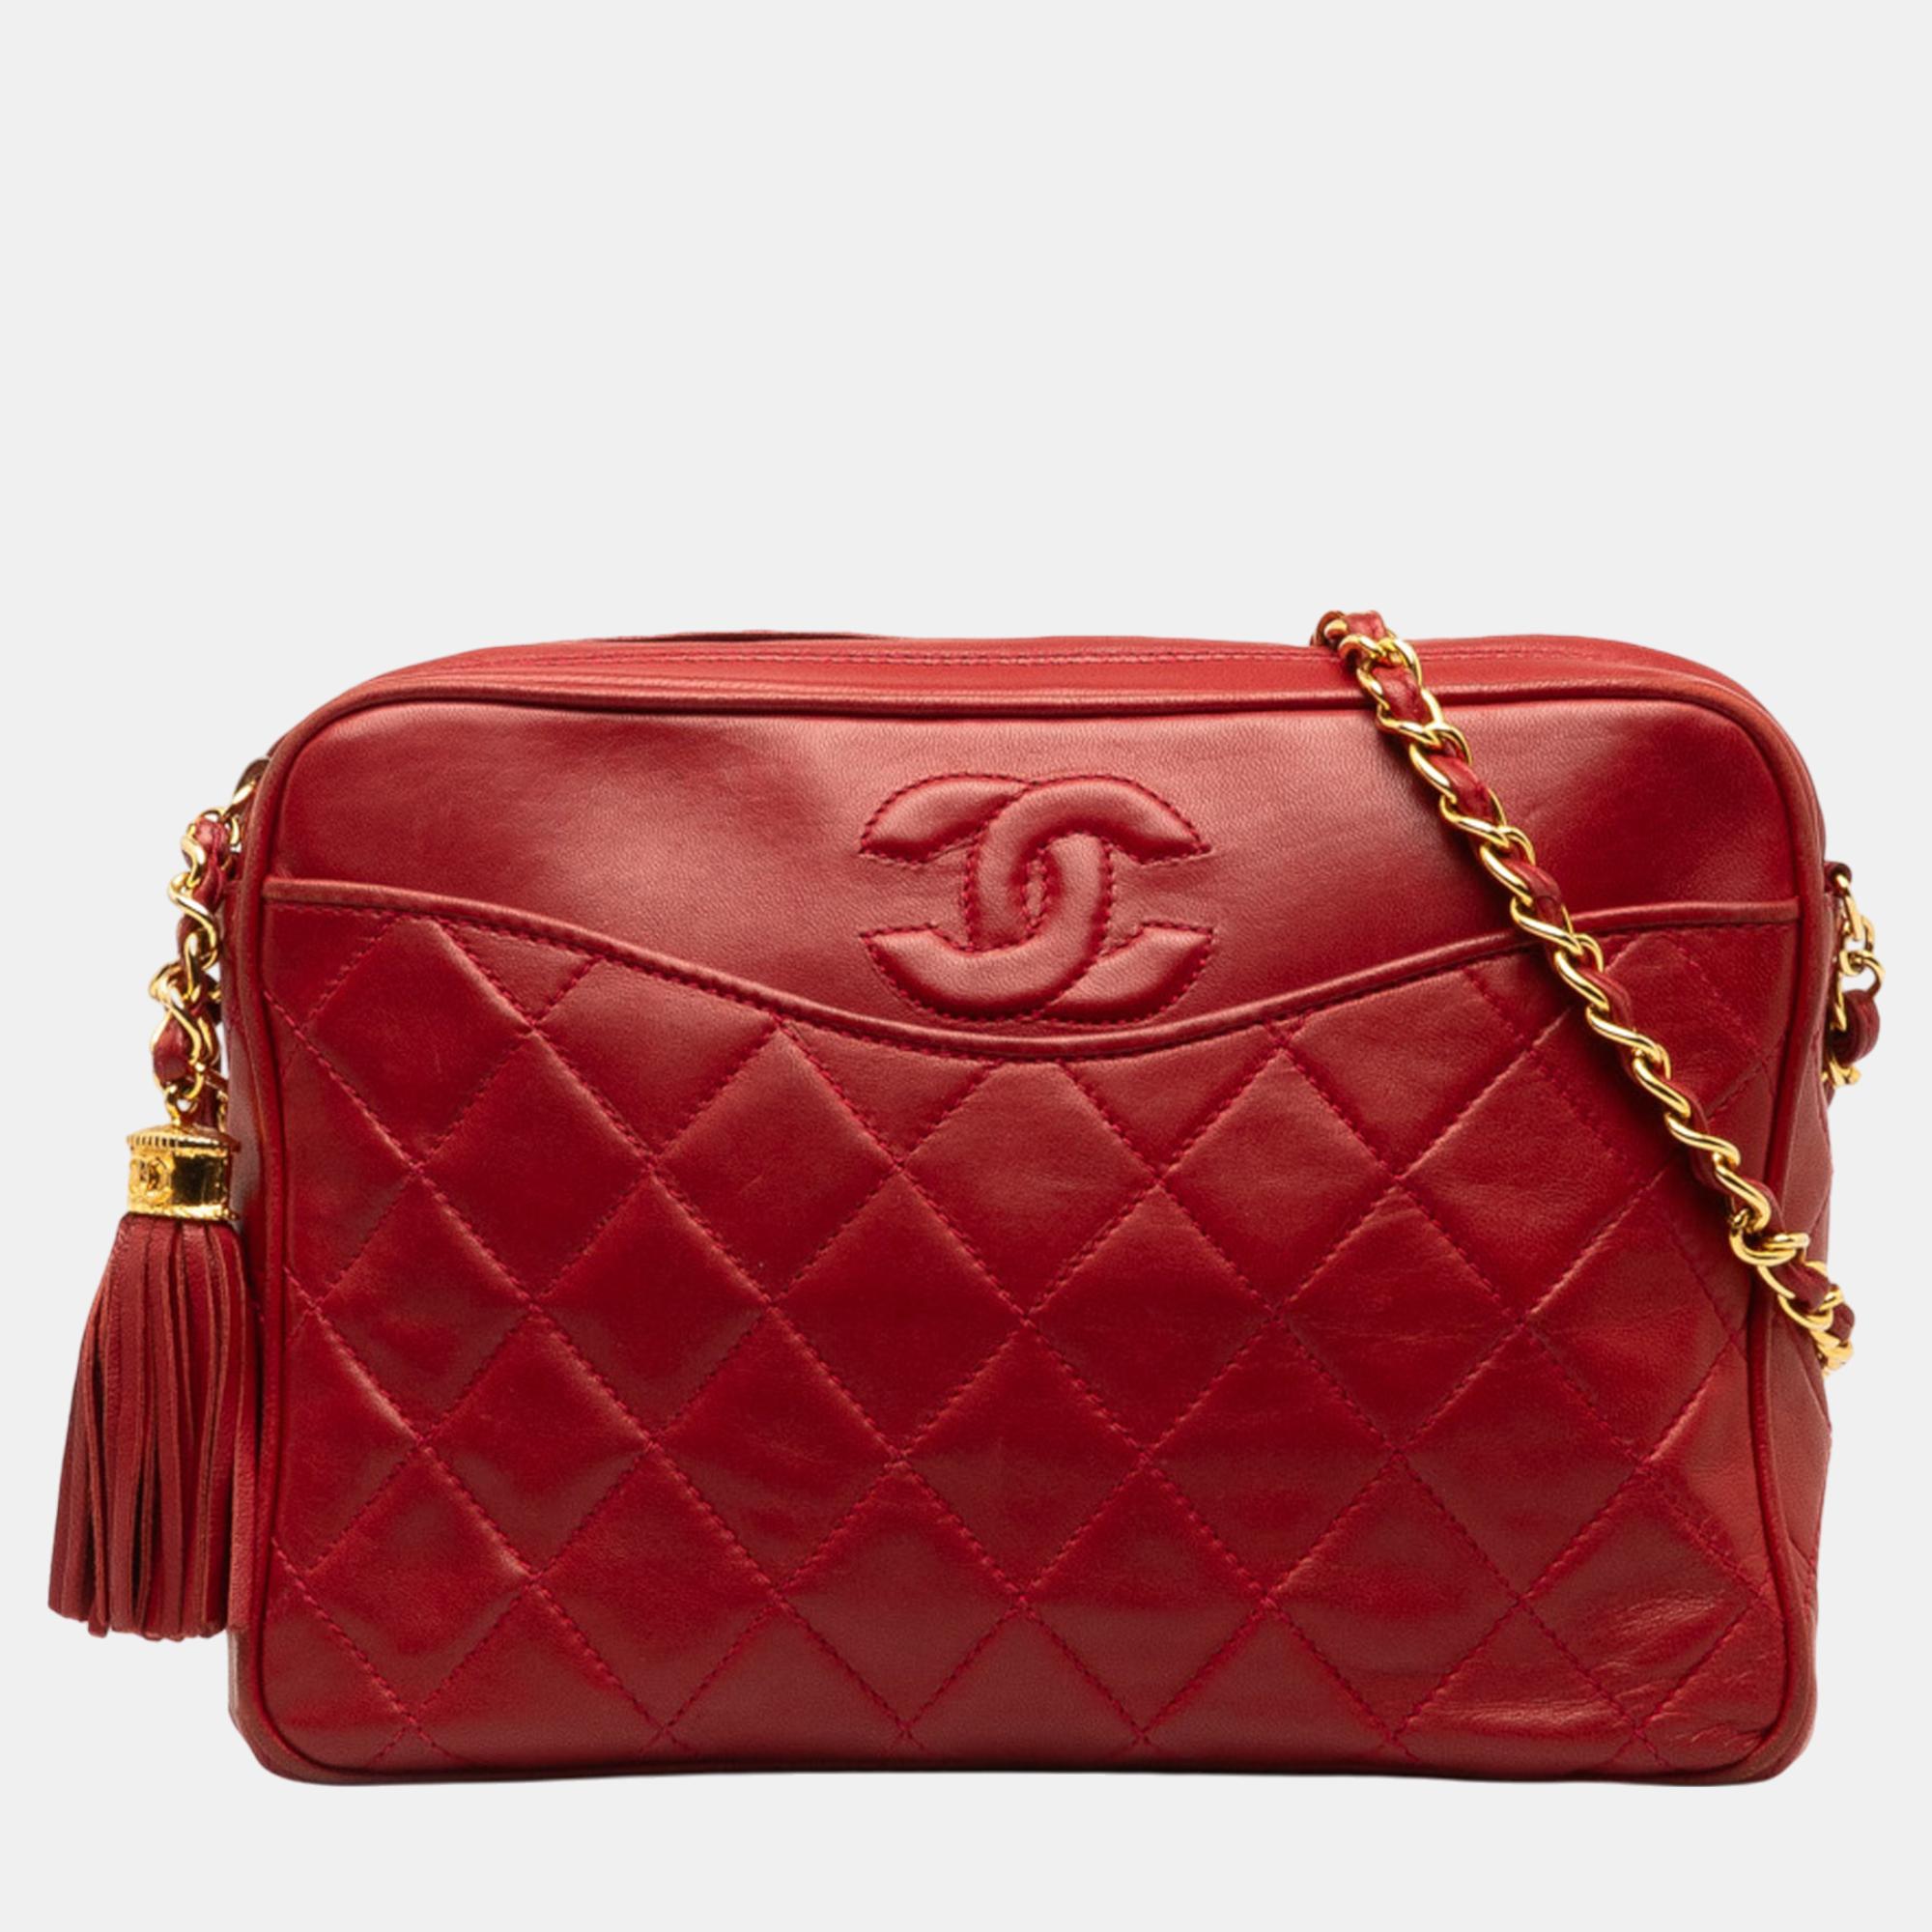 Chanel red cc tassel camera bag